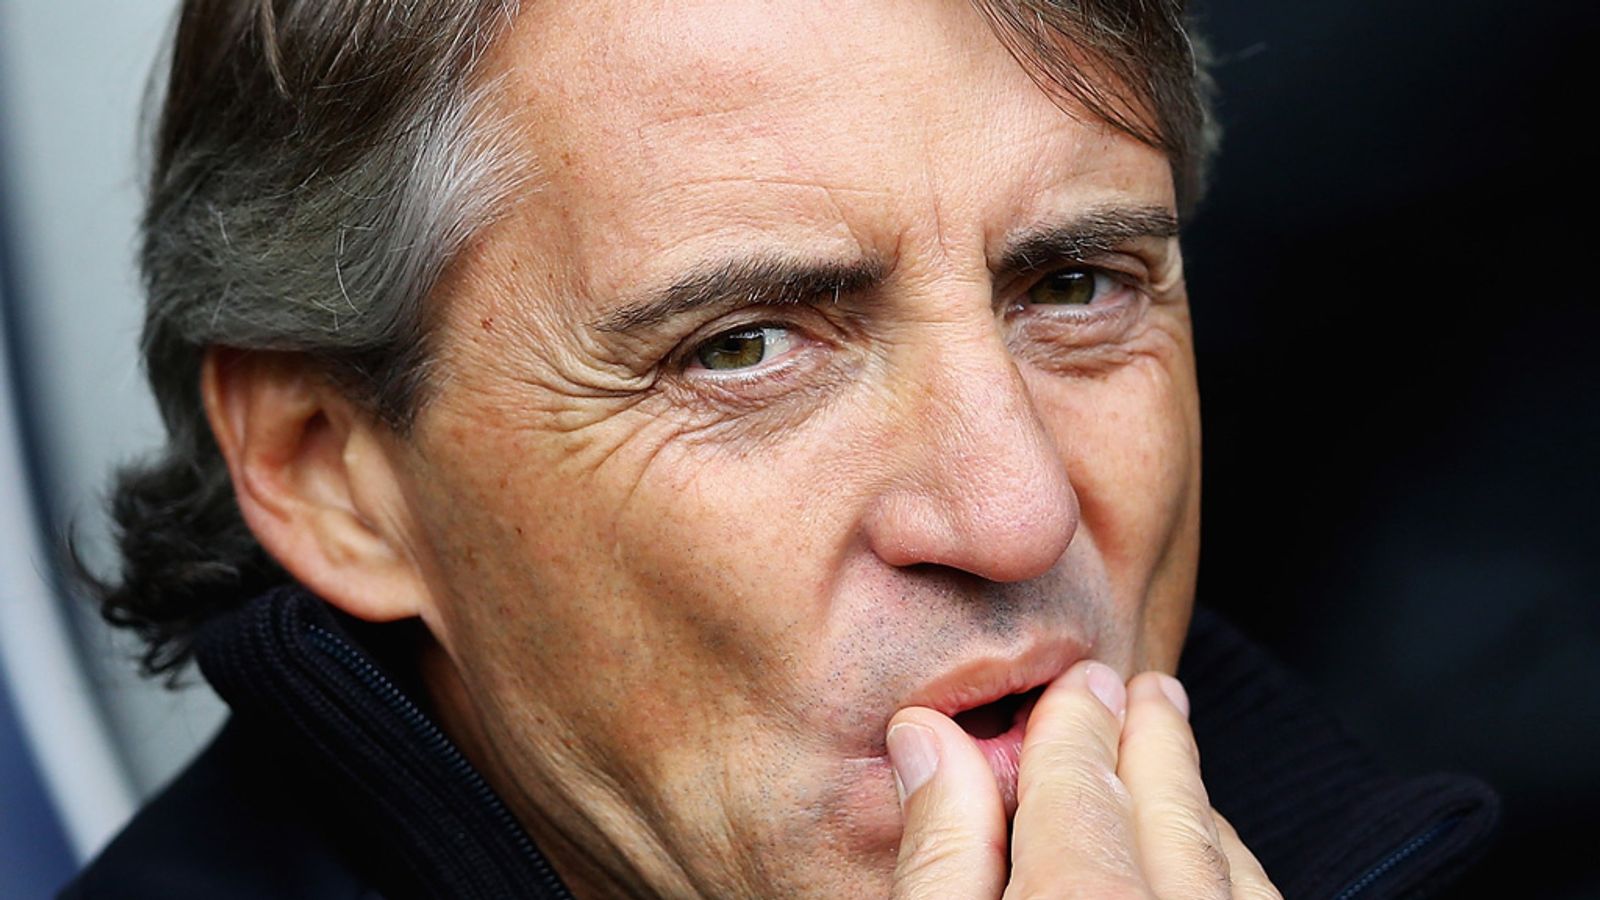 Manchester City manager Roberto Mancini dismisses critics ...